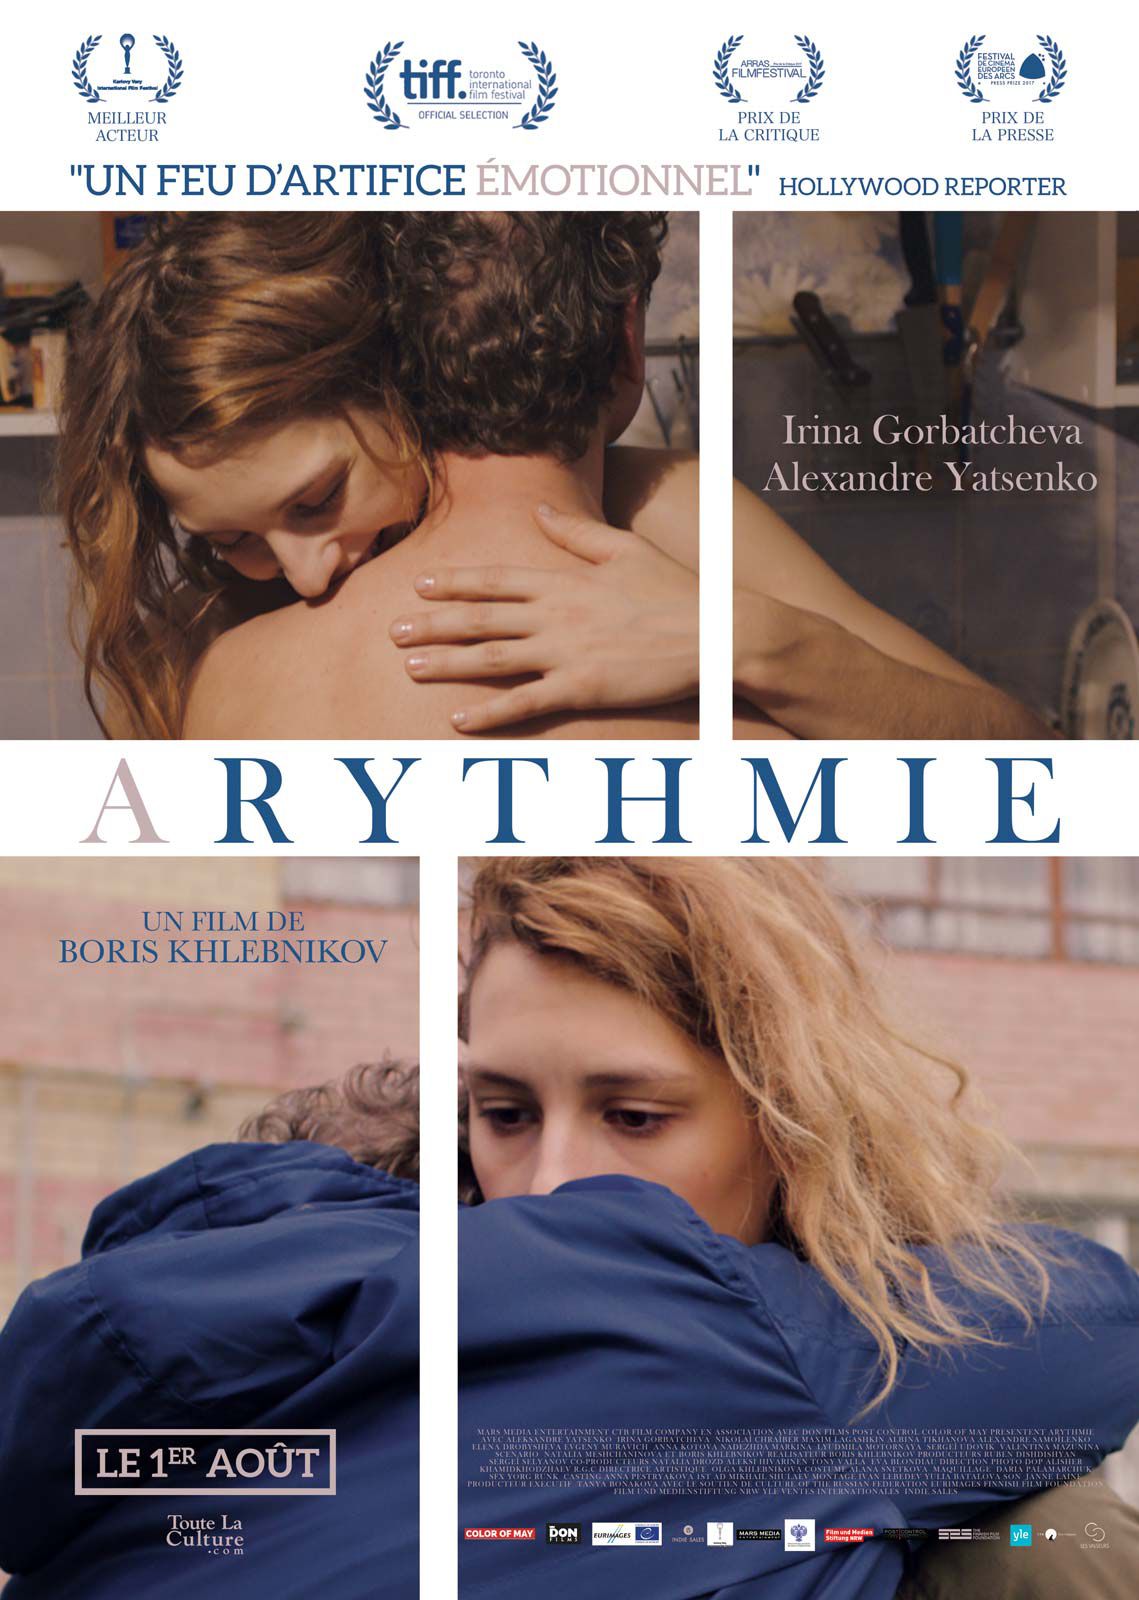 Arythmie - Film (2018) streaming VF gratuit complet